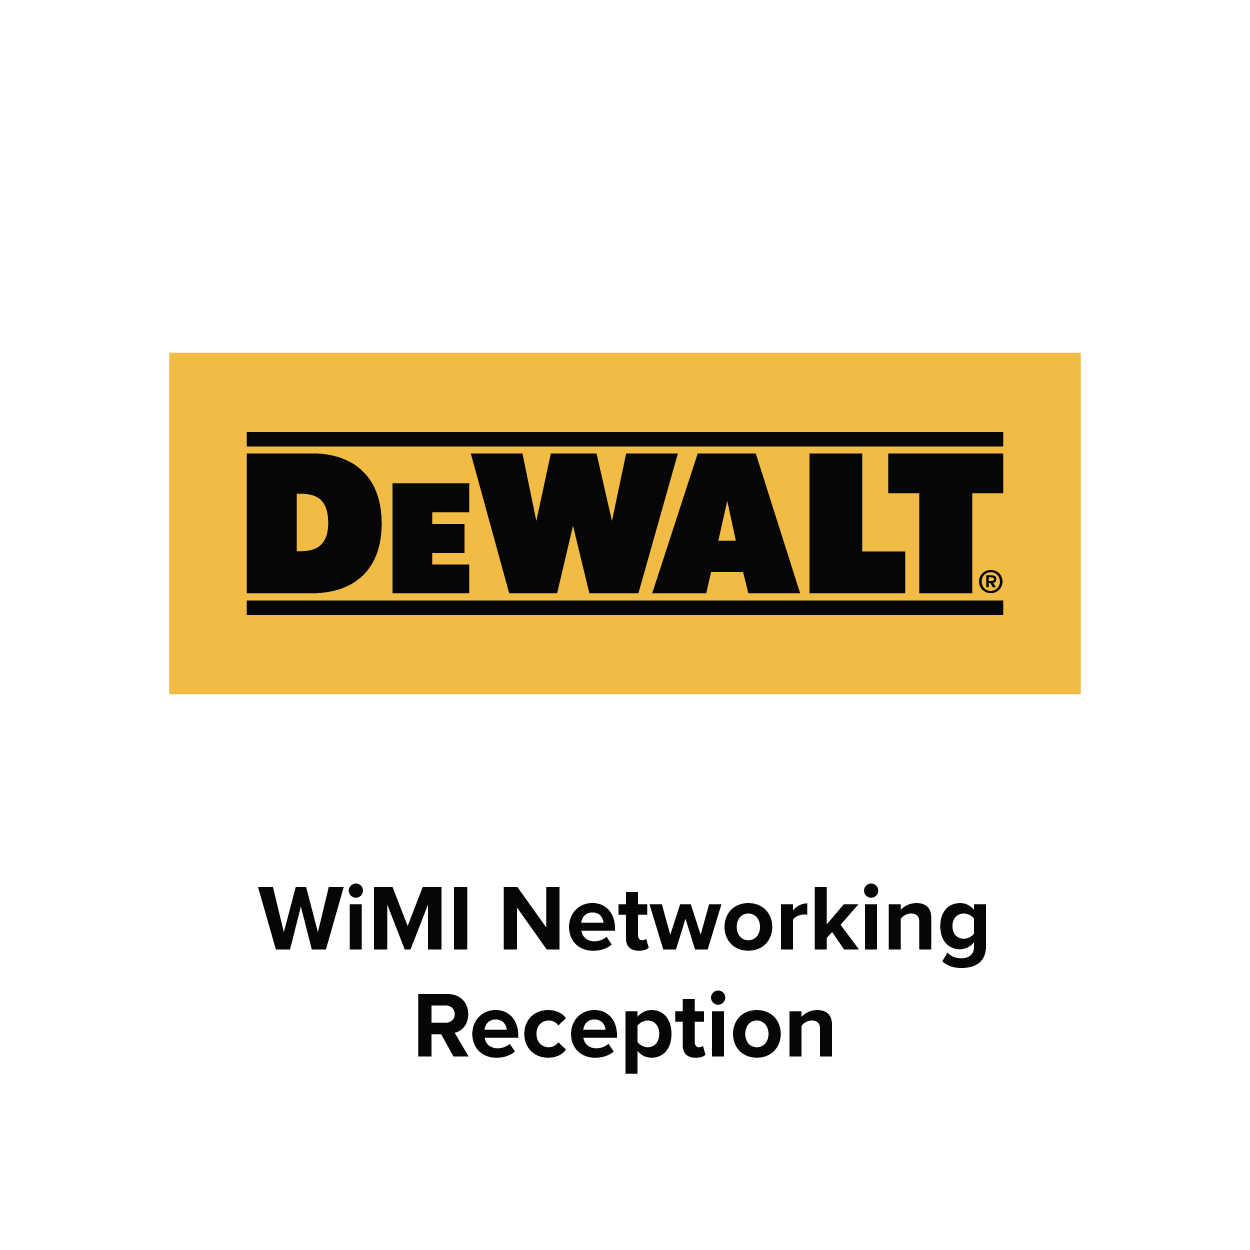 DEWALT Industrial Tool Company